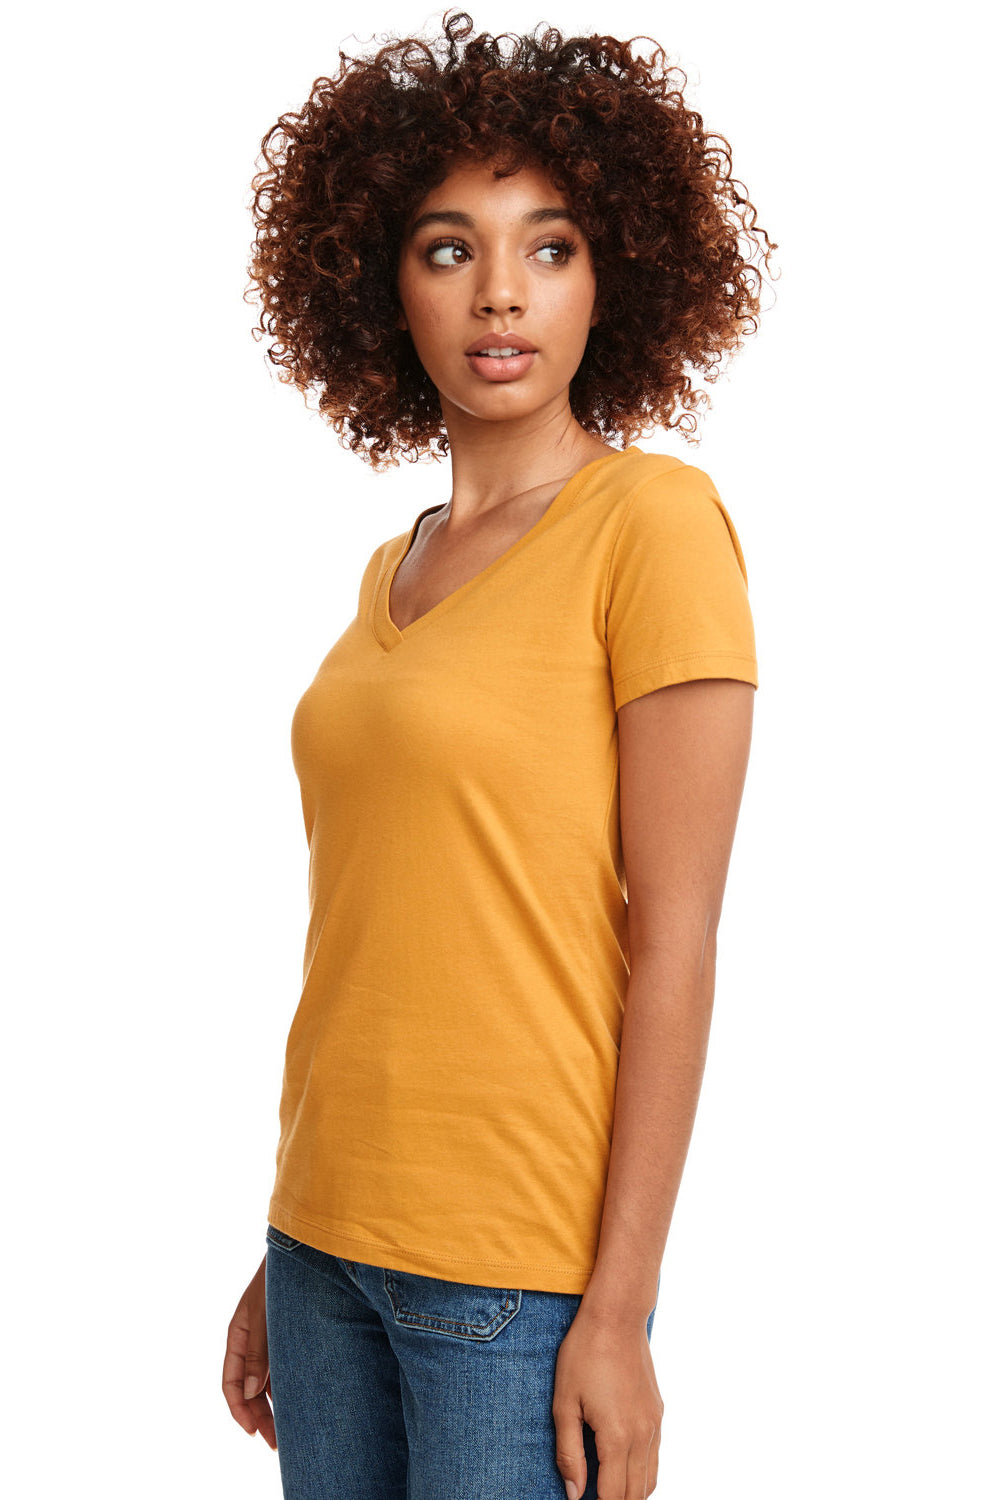 Next Level N1540/1540 Womens Ideal Jersey Short Sleeve V-Neck T-Shirt Antique Gold 3Q